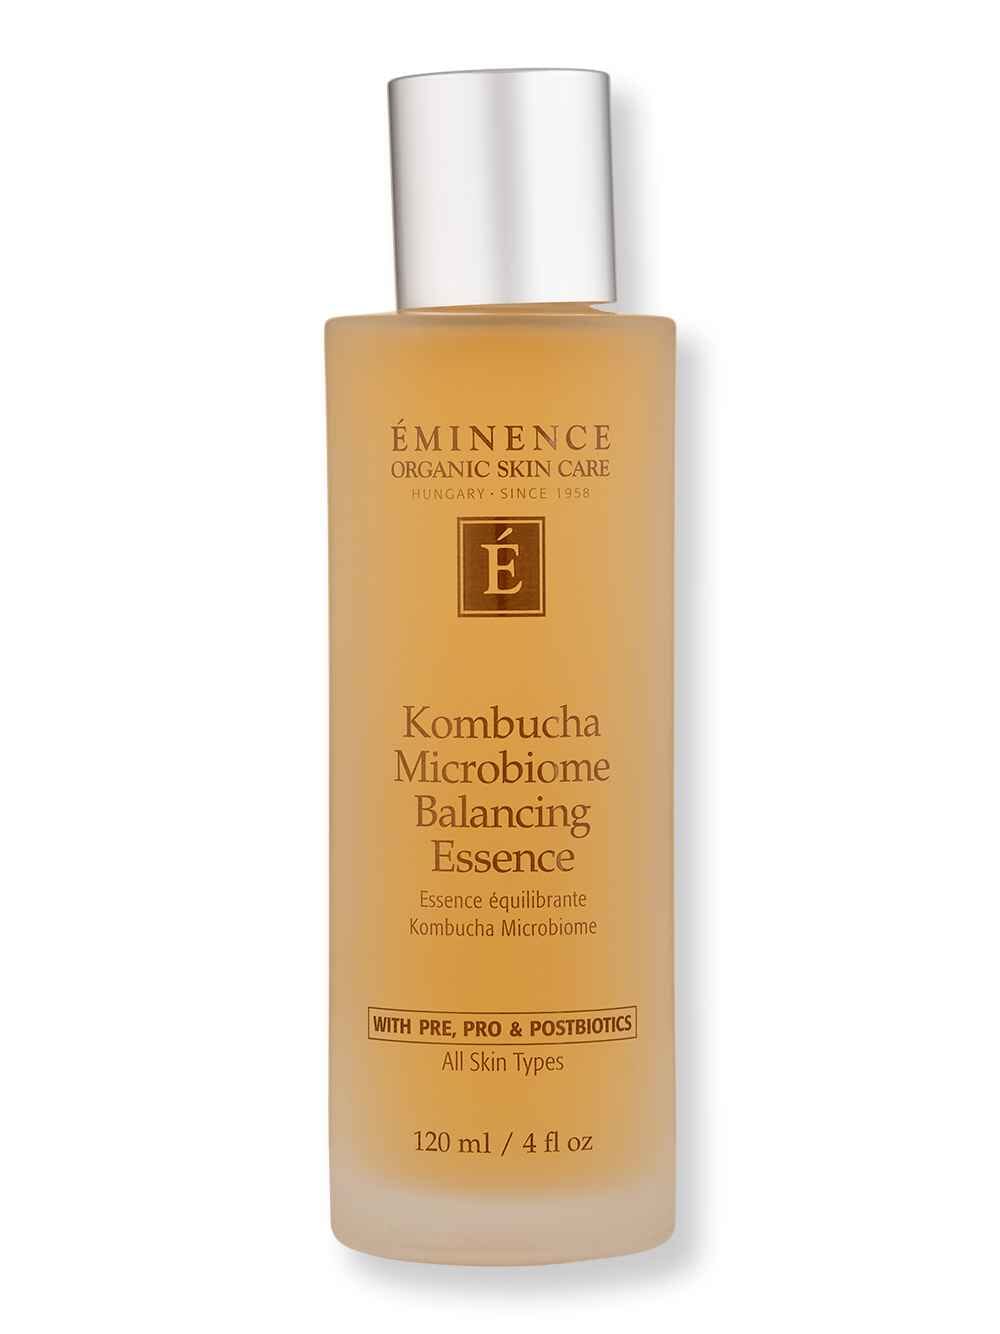 Eminence Eminence Kombucha Microbiome Balancing Essence 4 oz Face Mists & Essences 